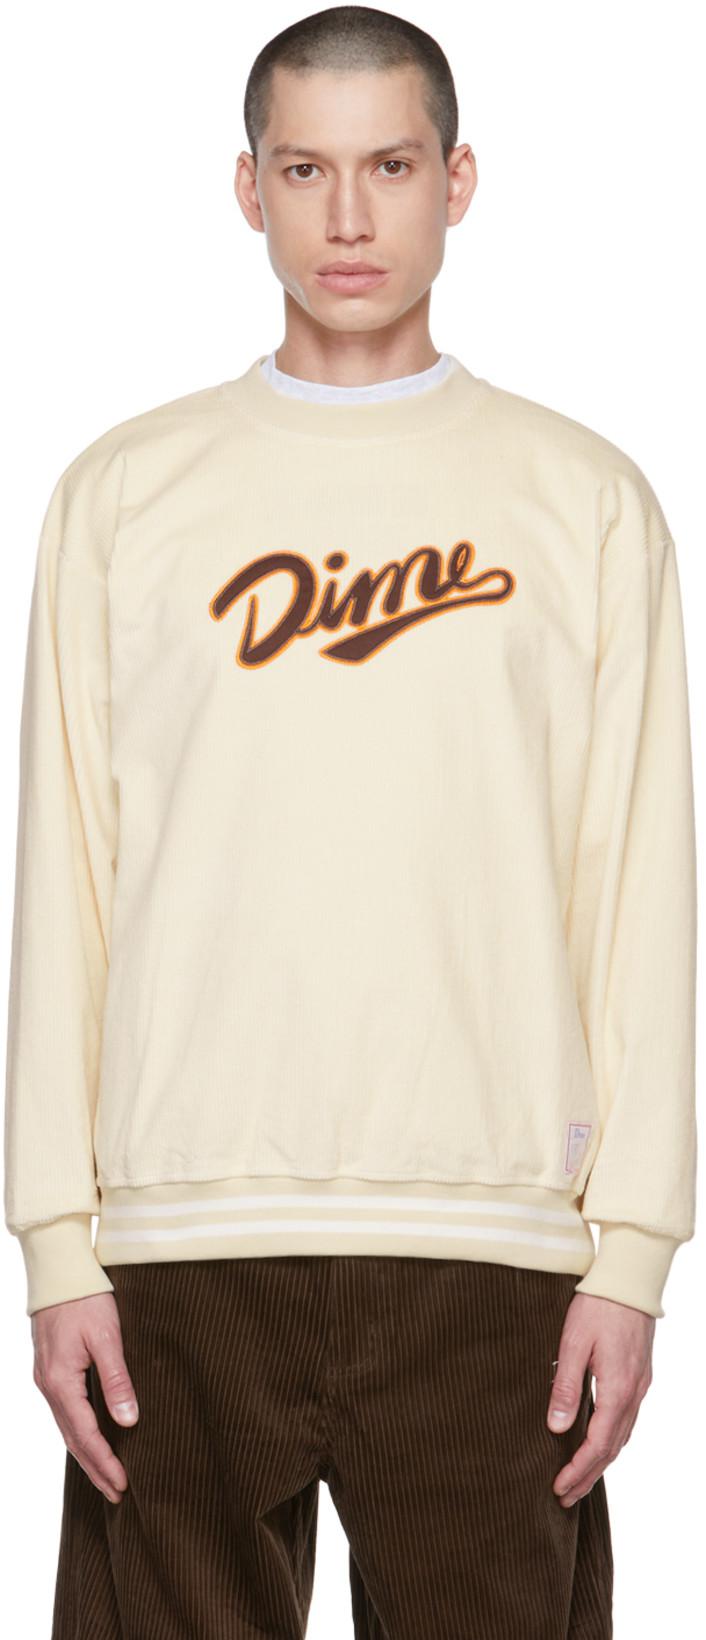 Off-White Team Sweatshirt by DIME